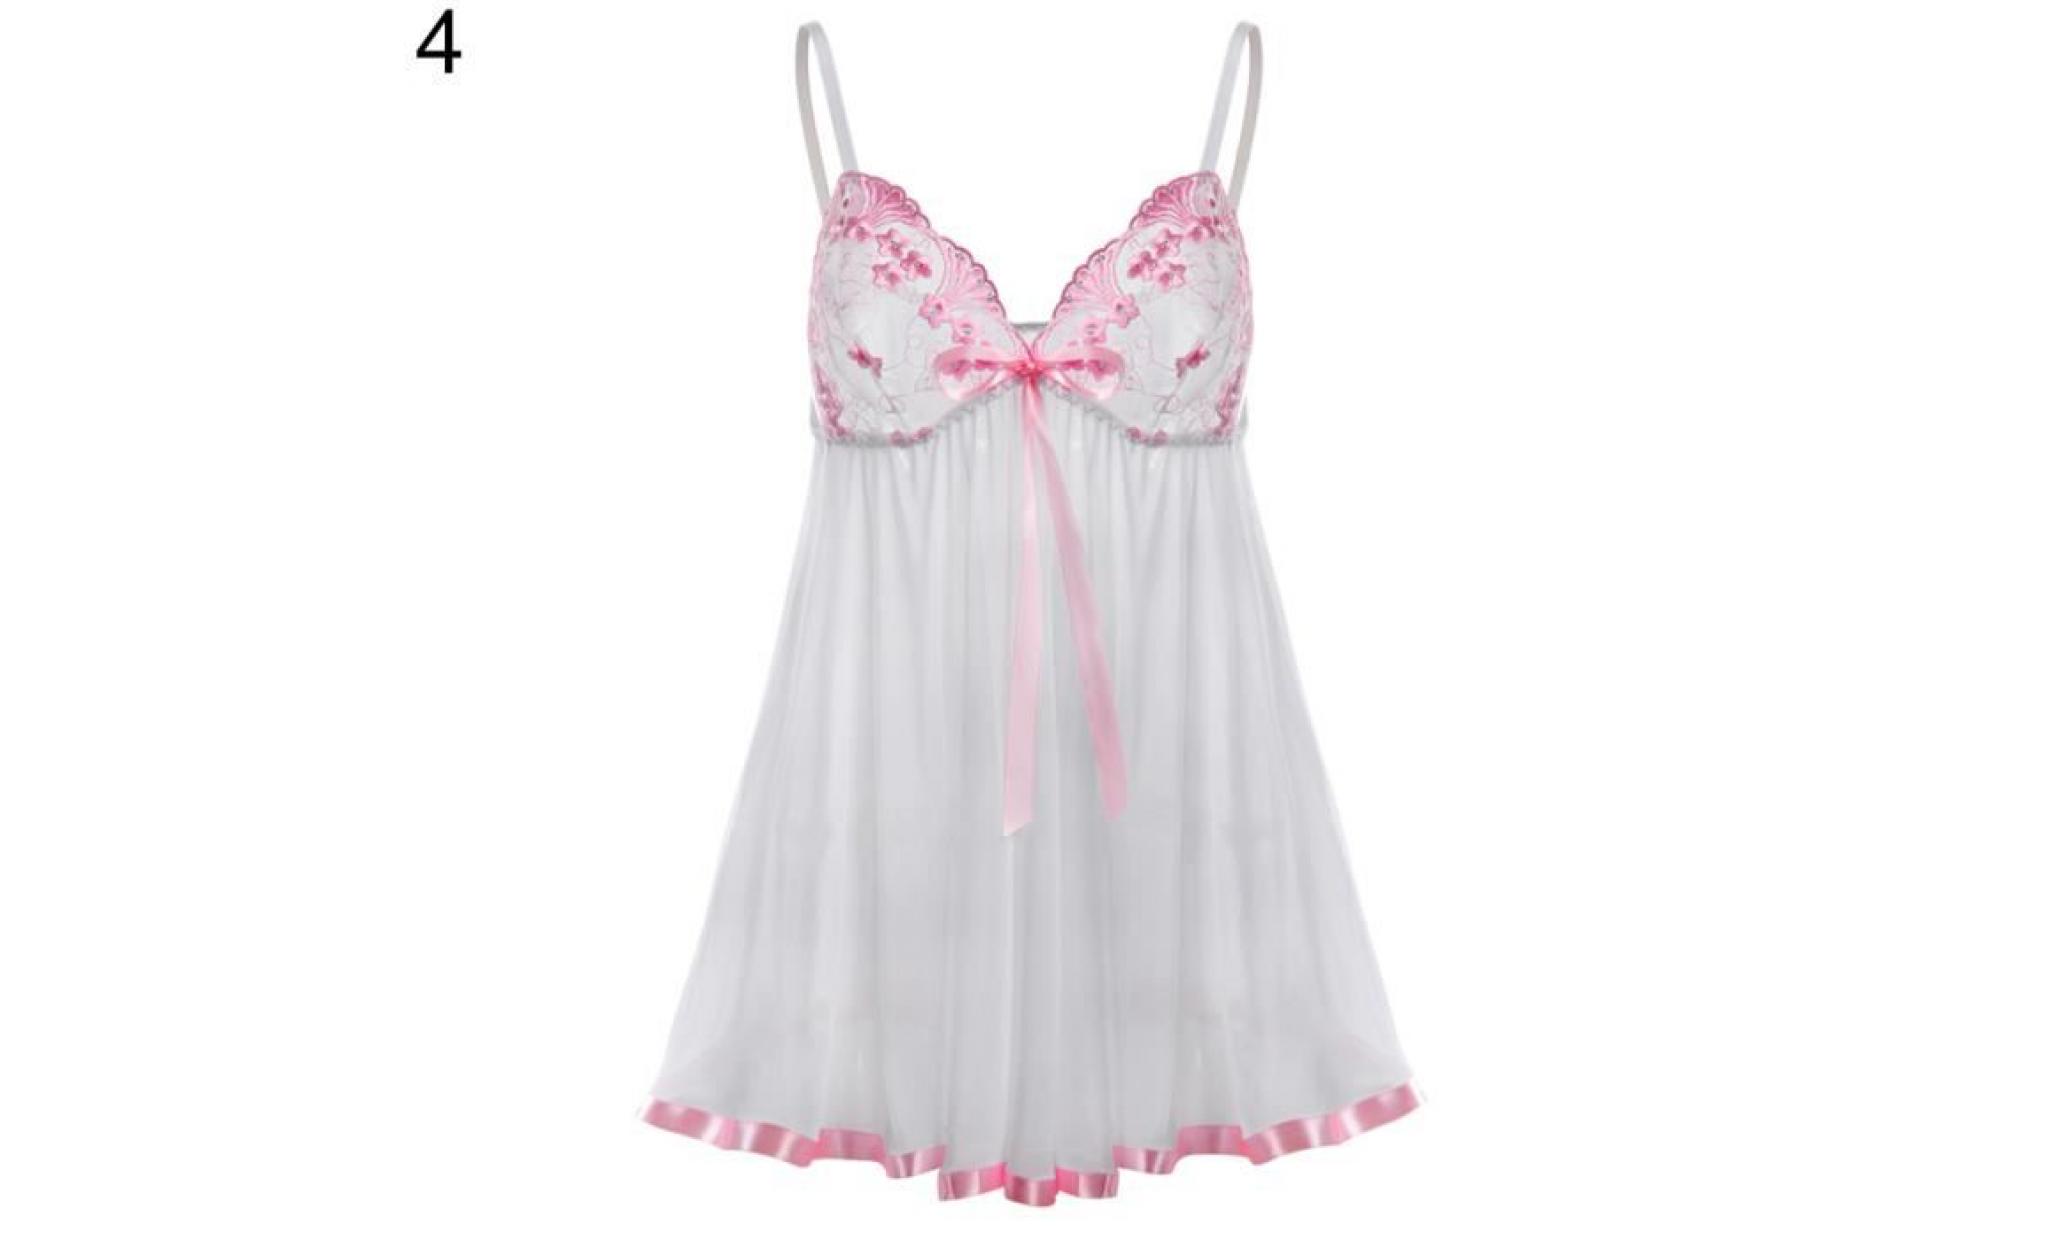 robe en dentelle brodée transparente pour femmes throng sleepwear nightwear pink & white s